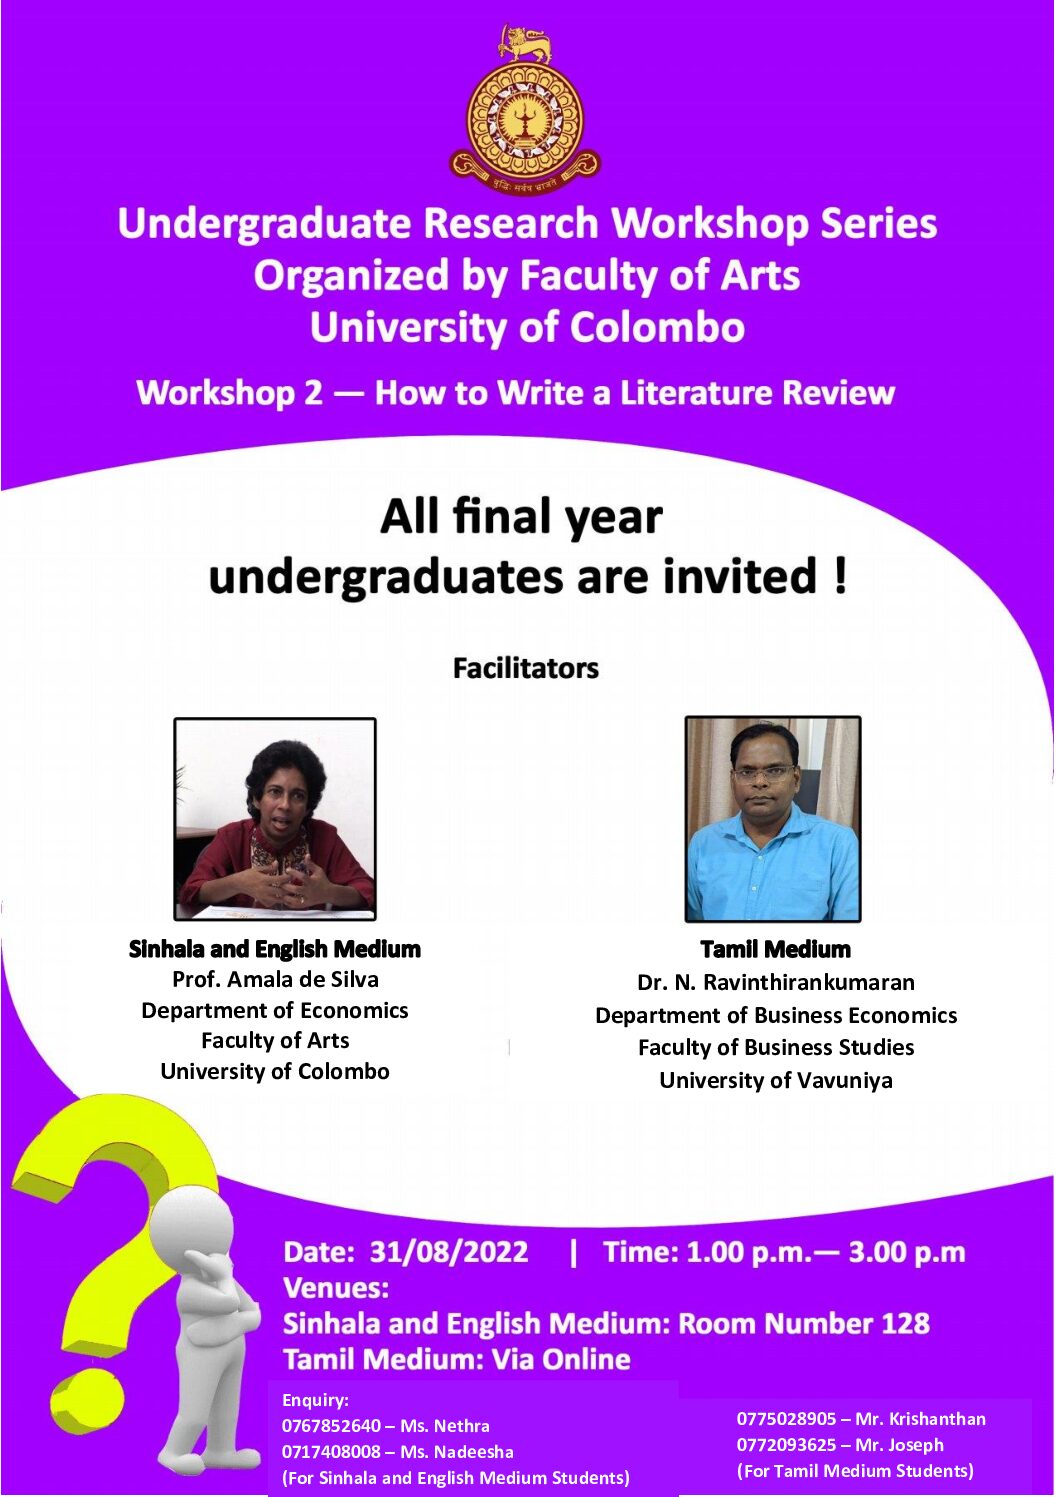 Workshop 2 – The Undergraduate Research Workshop Series for final year undergraduates